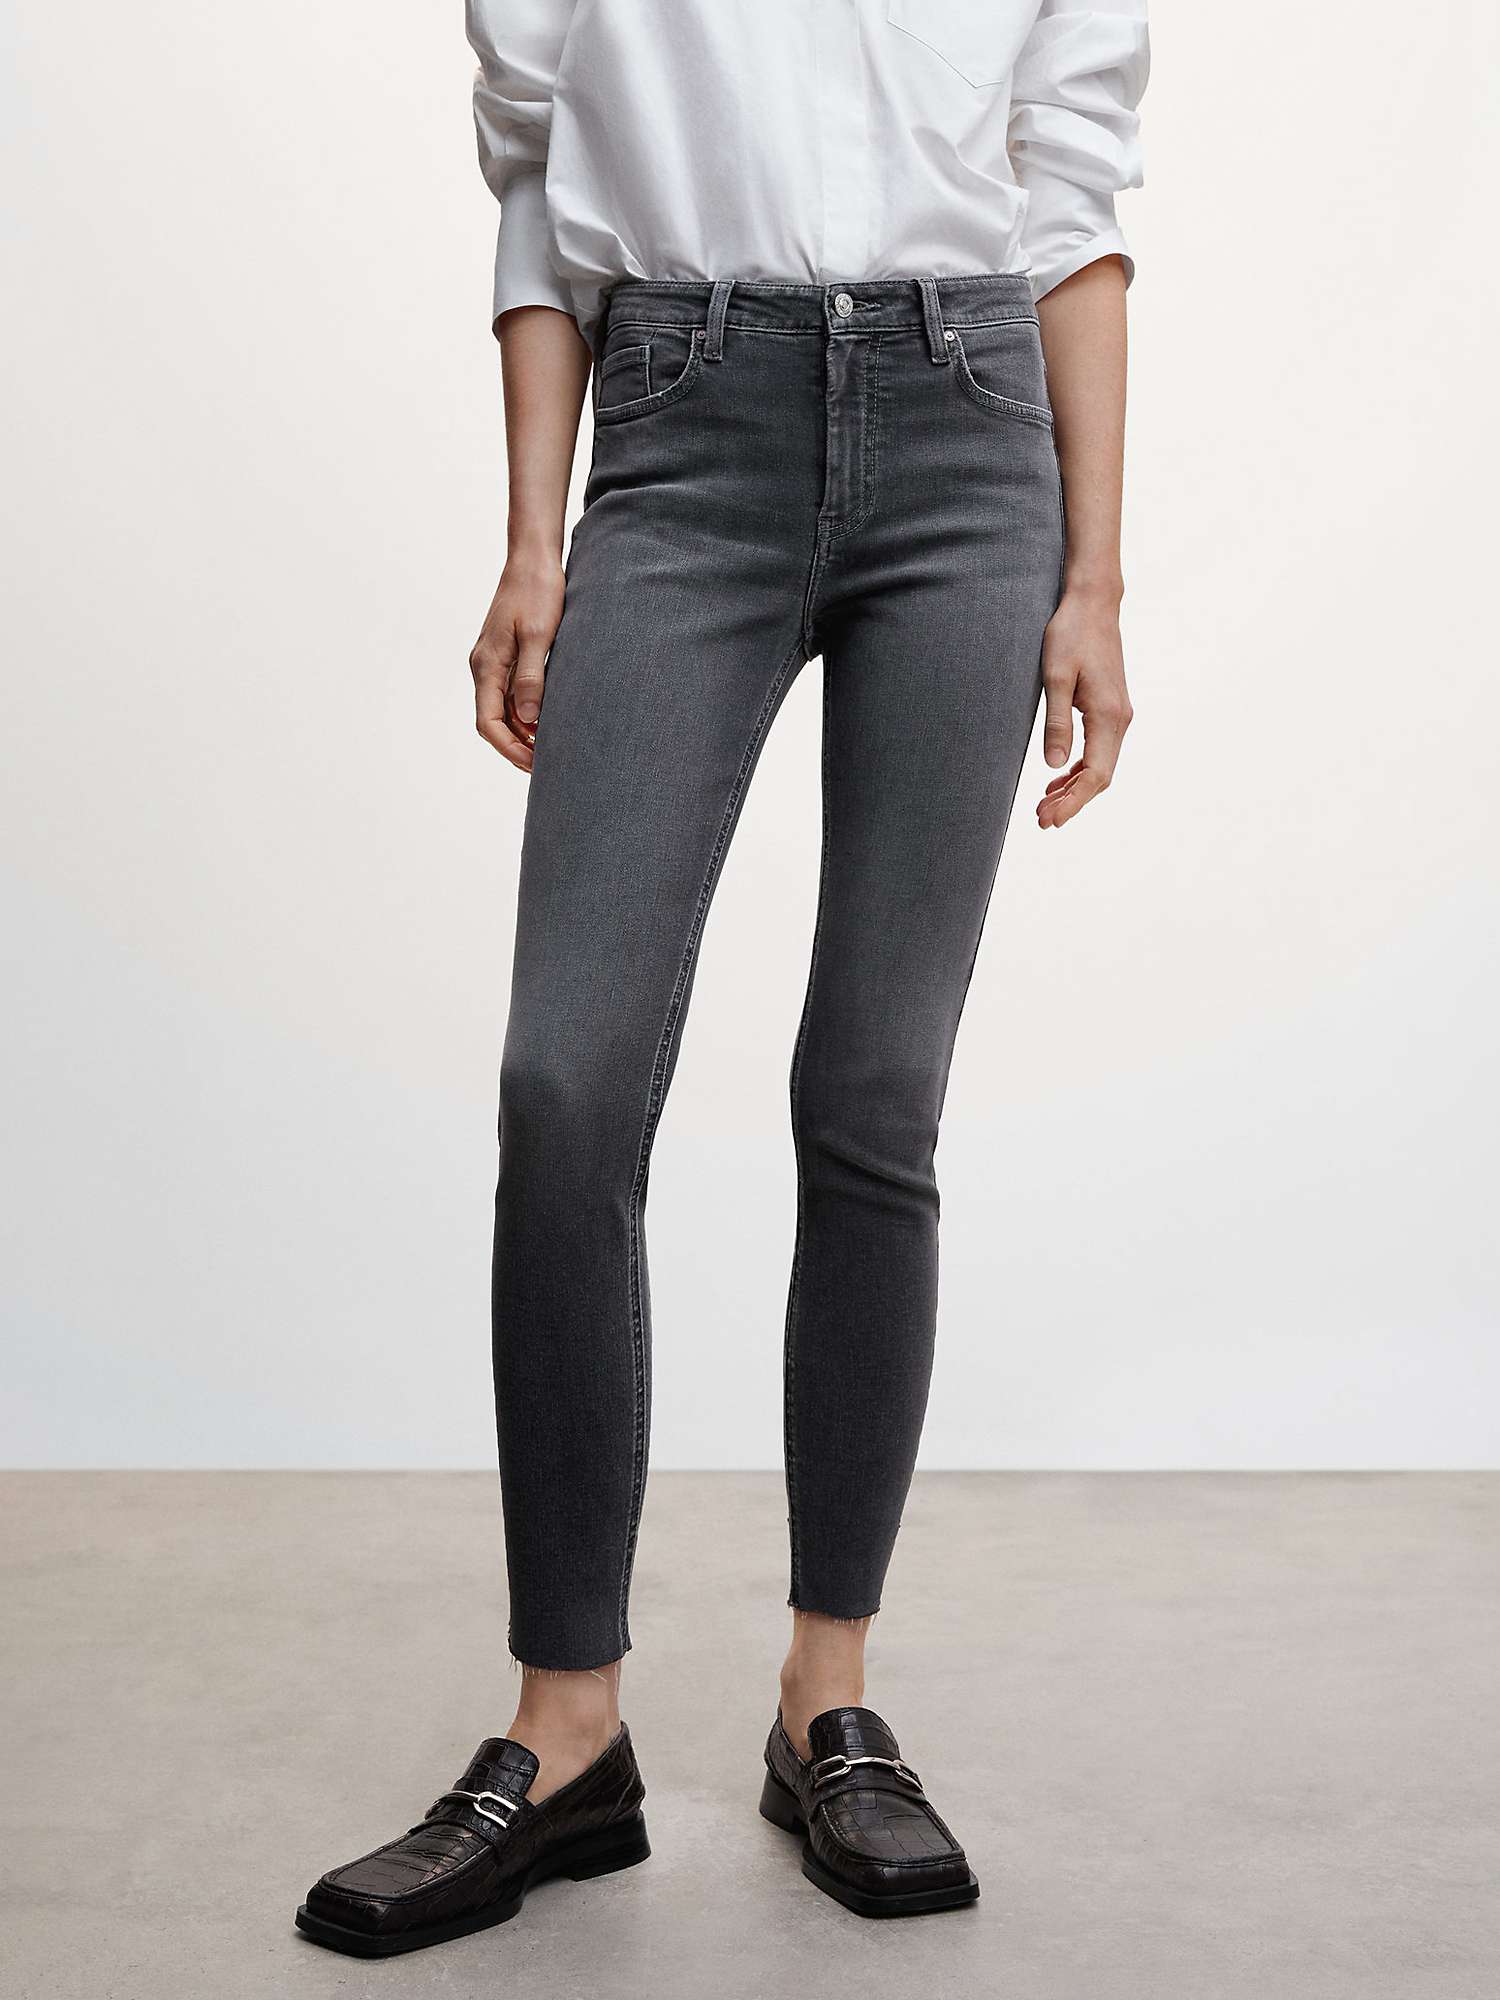 Mango Isa Skinny Jeans, Grey at John Lewis & Partners